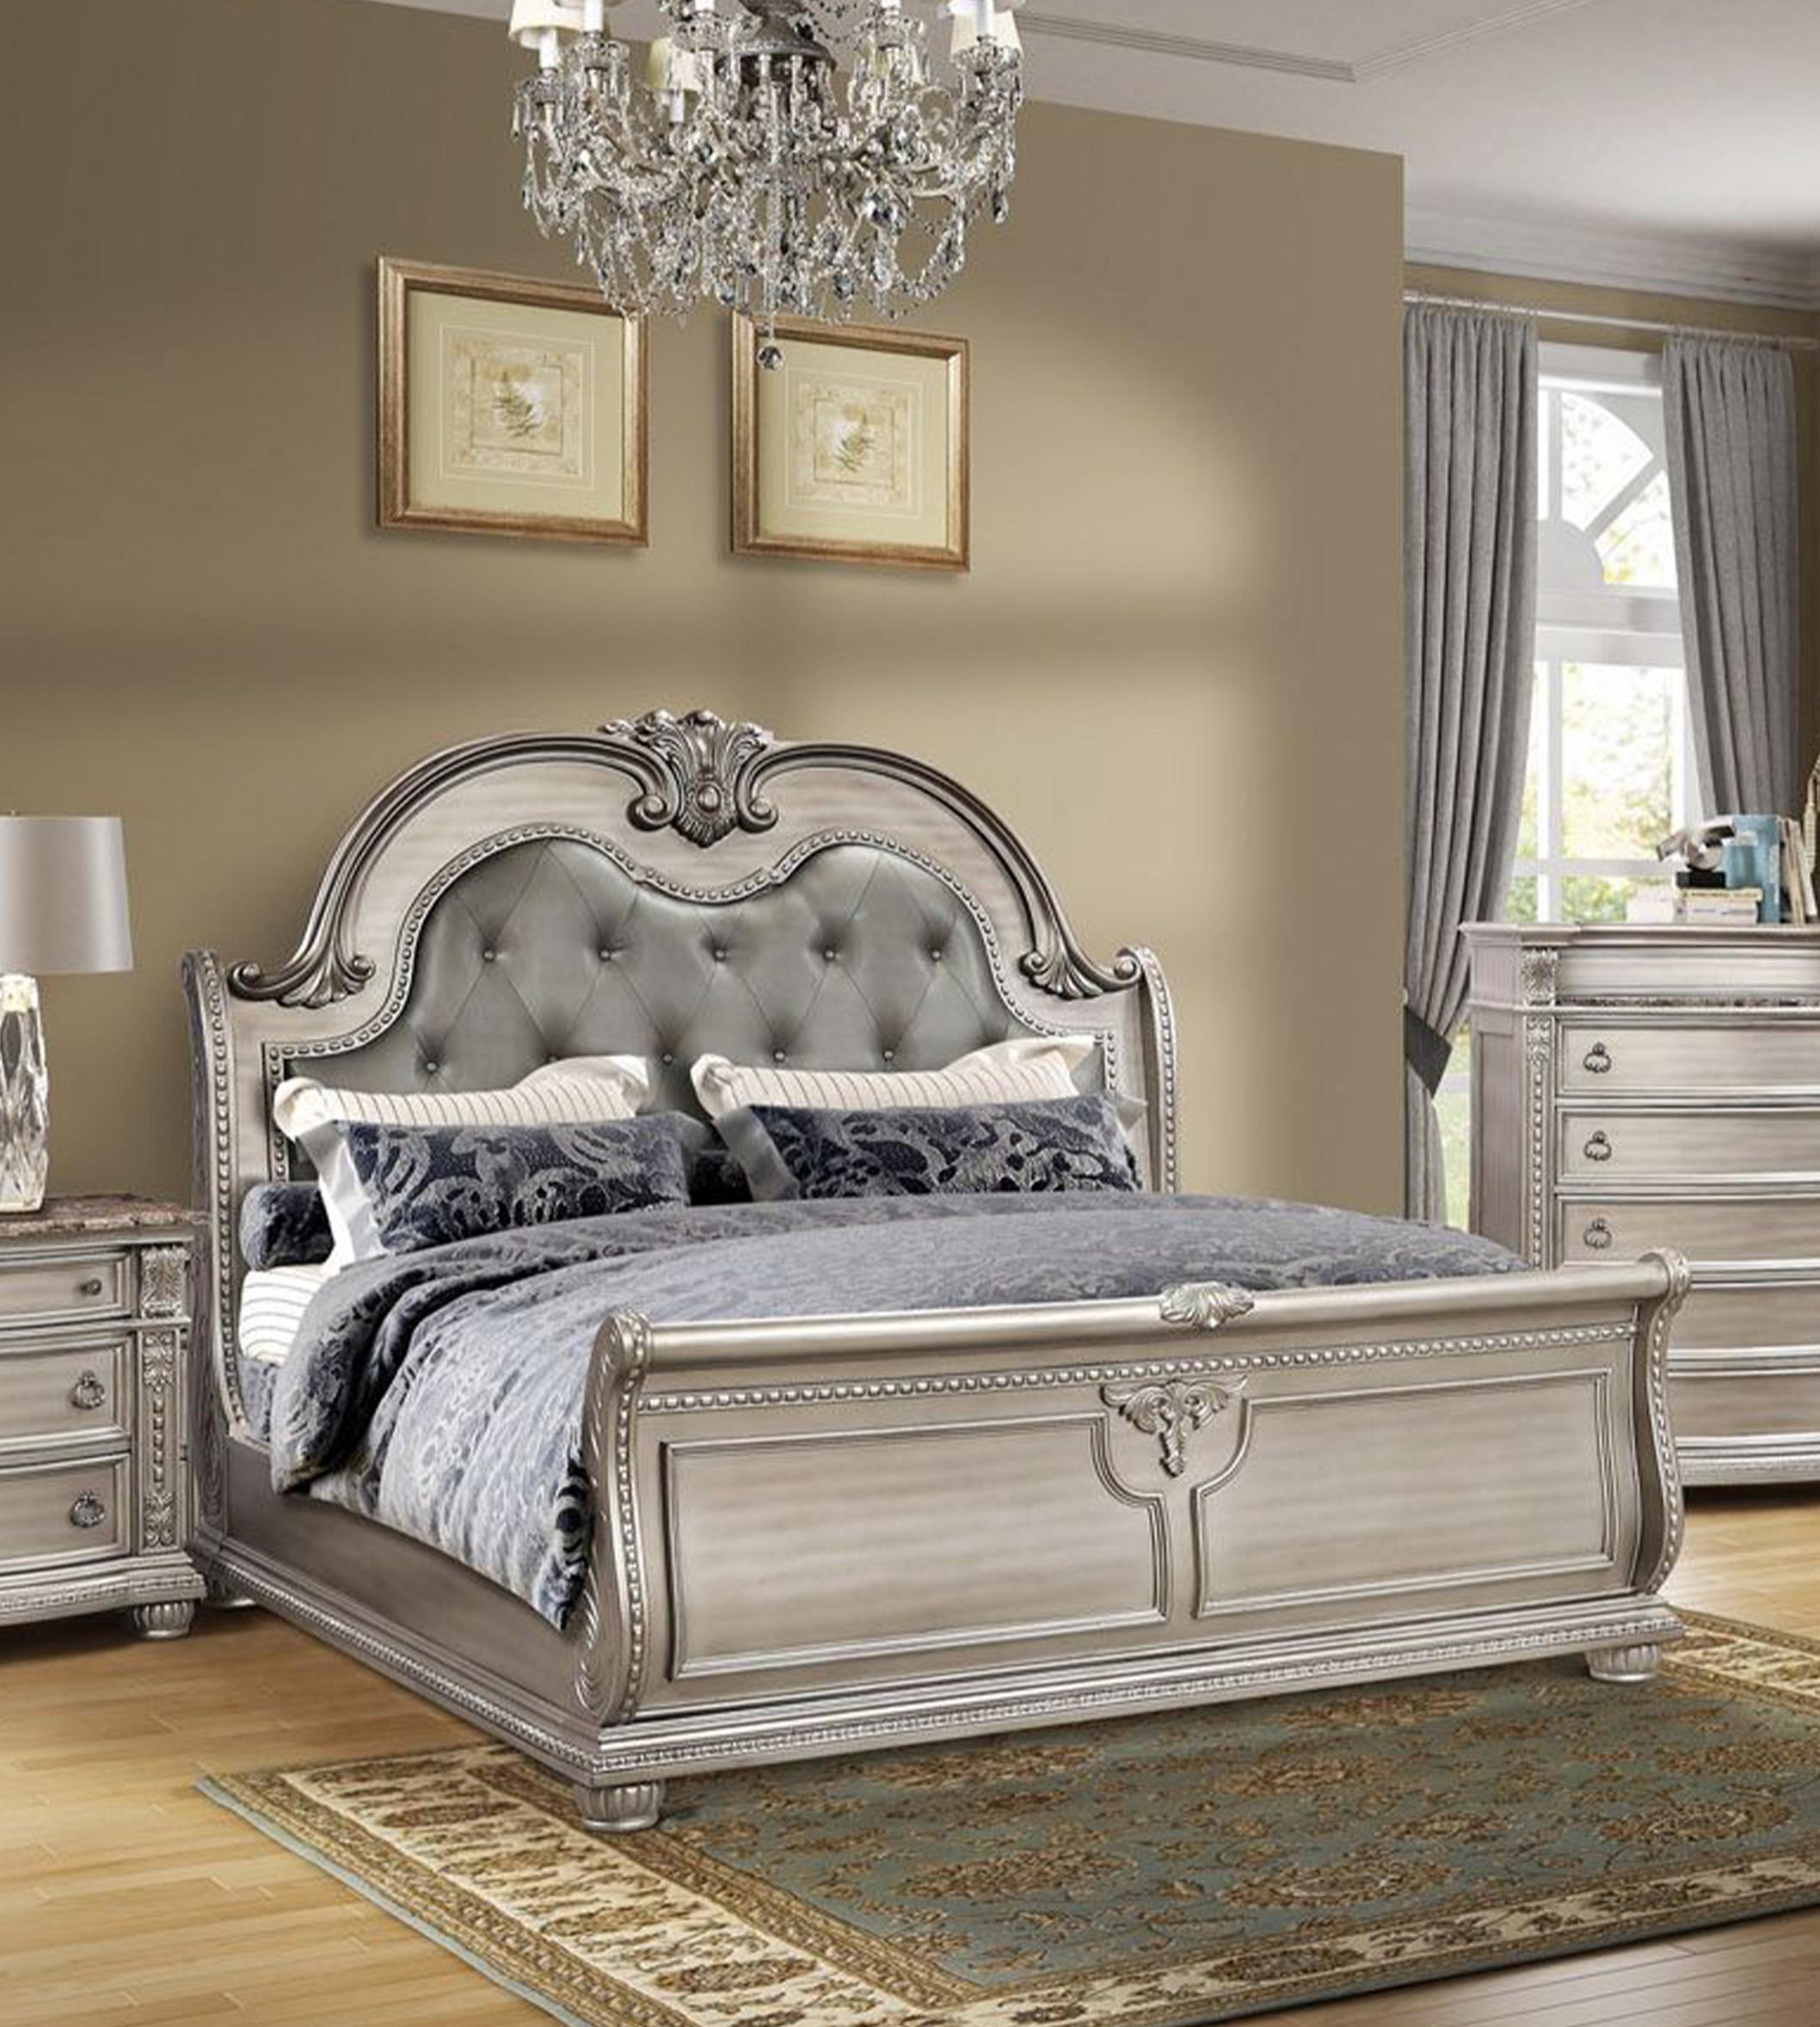 McFerran Furniture B9506 Sleigh Bed